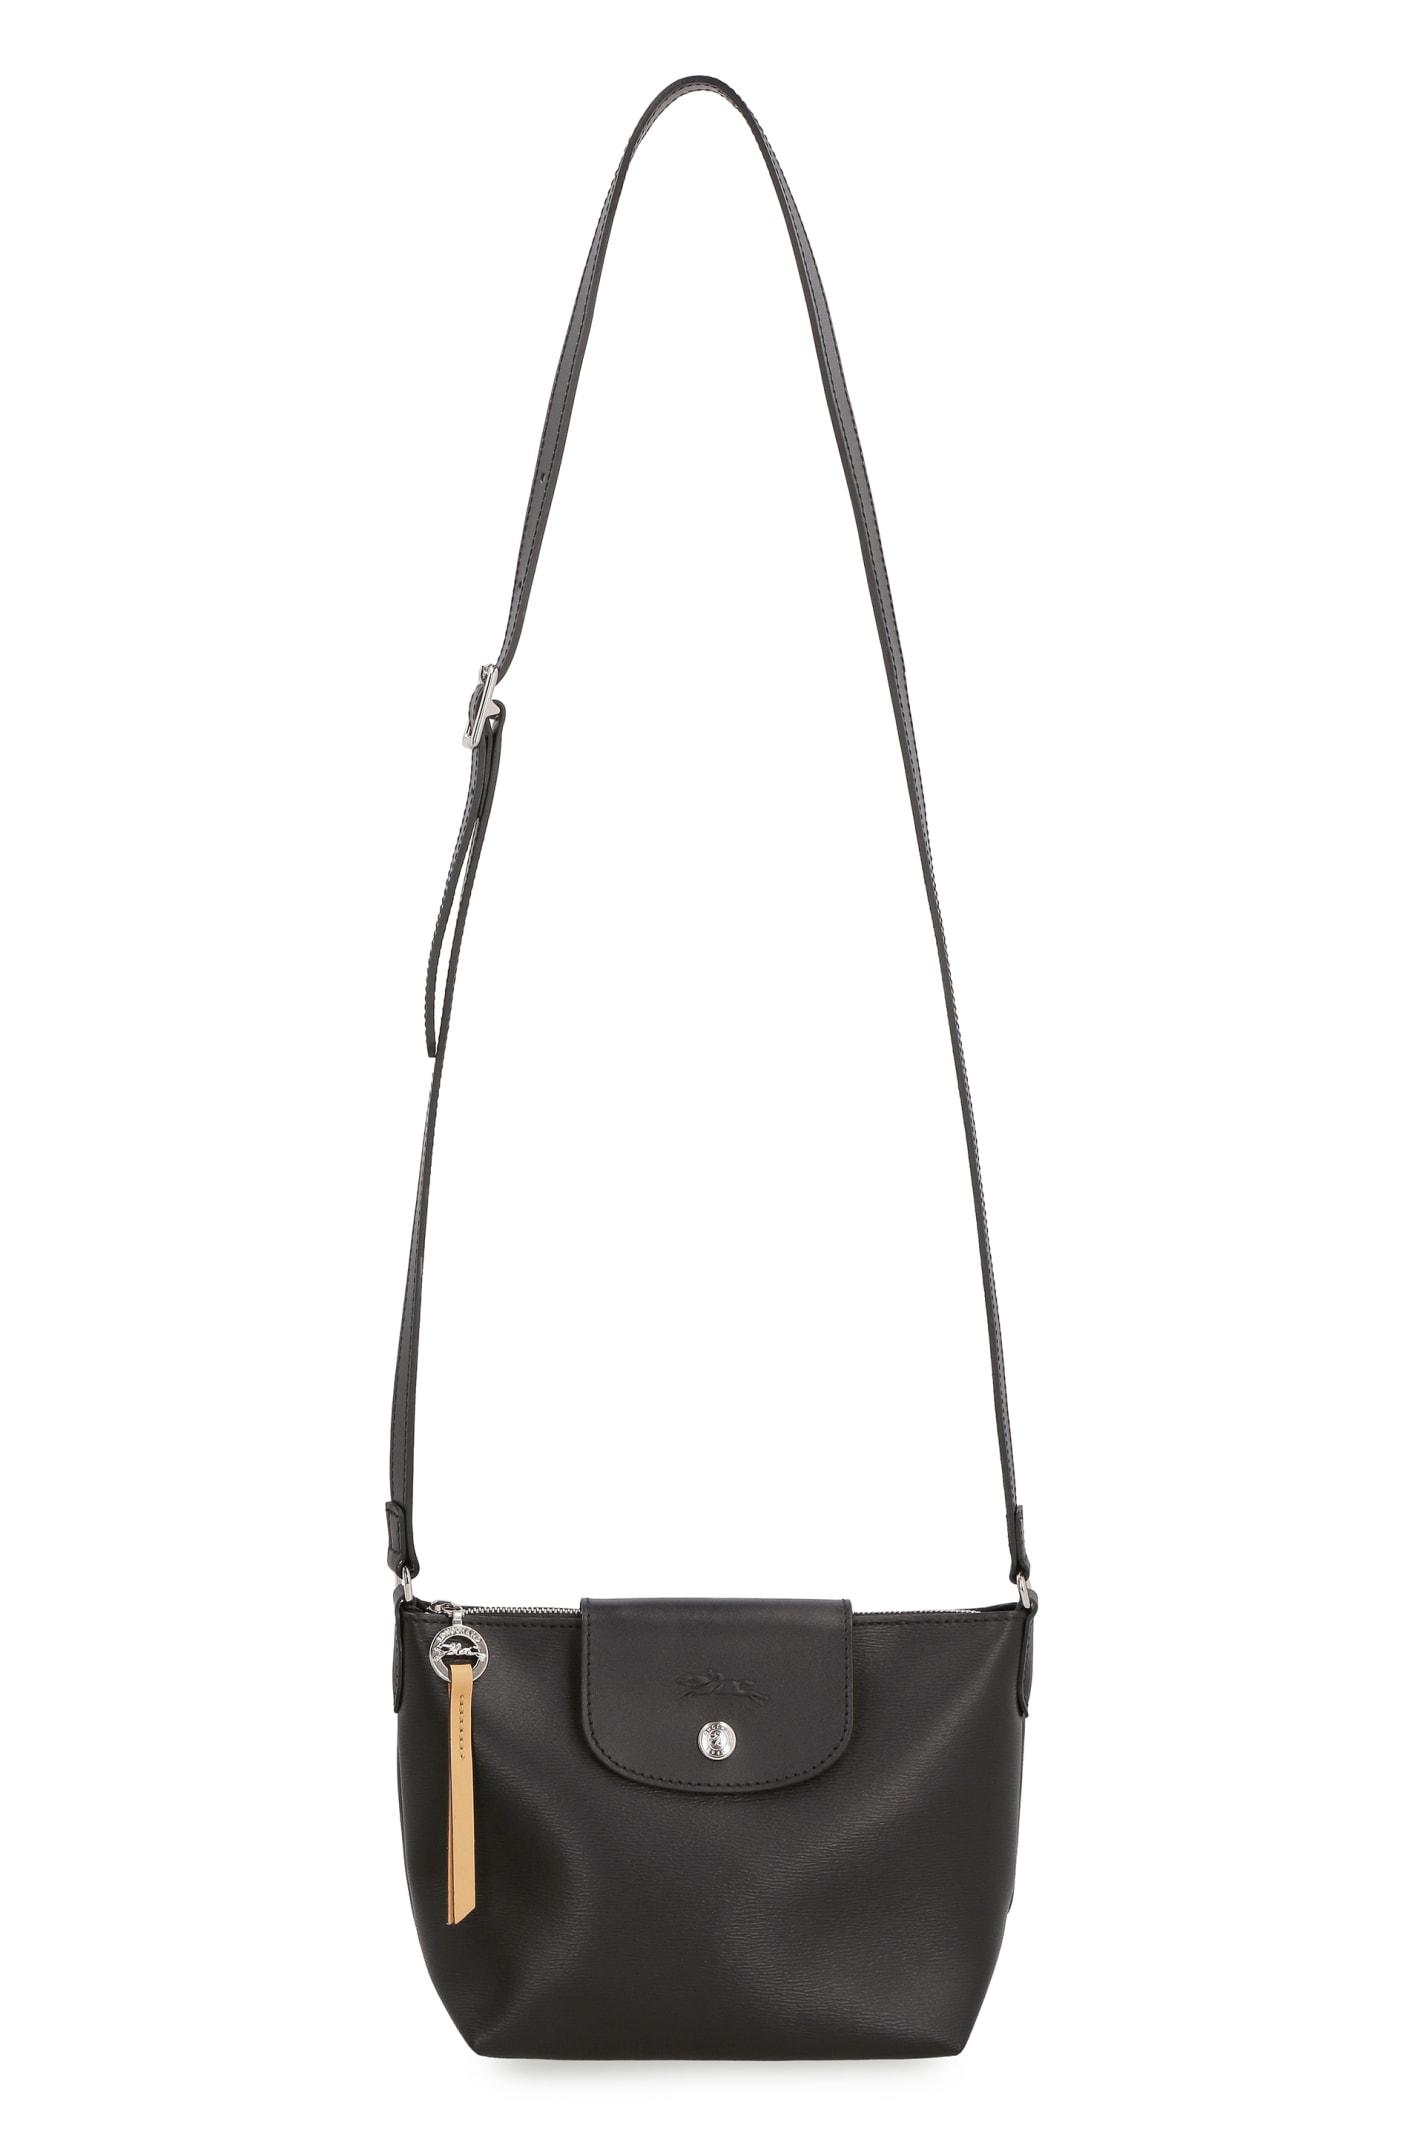 Longchamp XS Le Pliage Crossbody - Grey Mini Bags, Handbags - WL860311